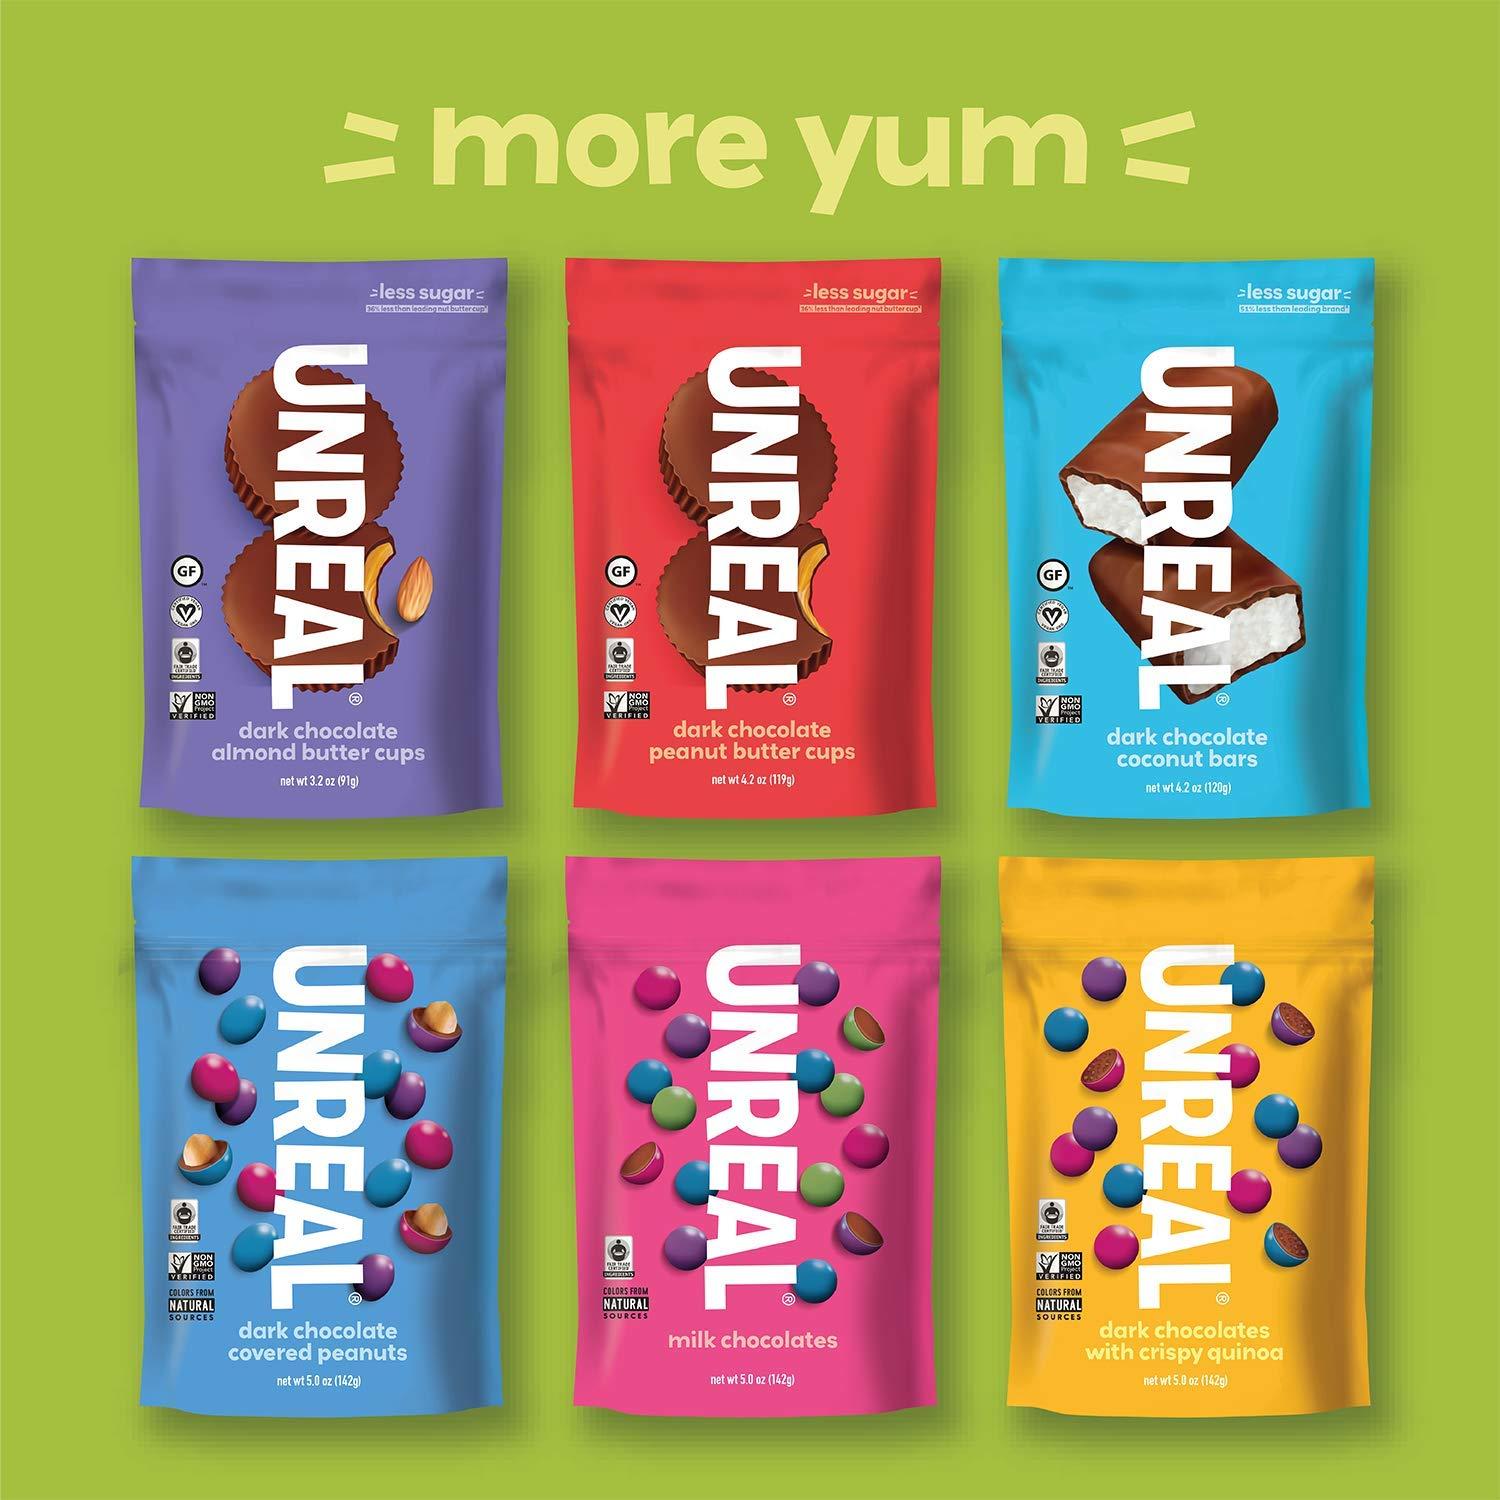 UnReal Dark Chocolate Crispy Quinoa Gems Pouch Bag 5oz (6ct) - RTZN Brand  Strategy